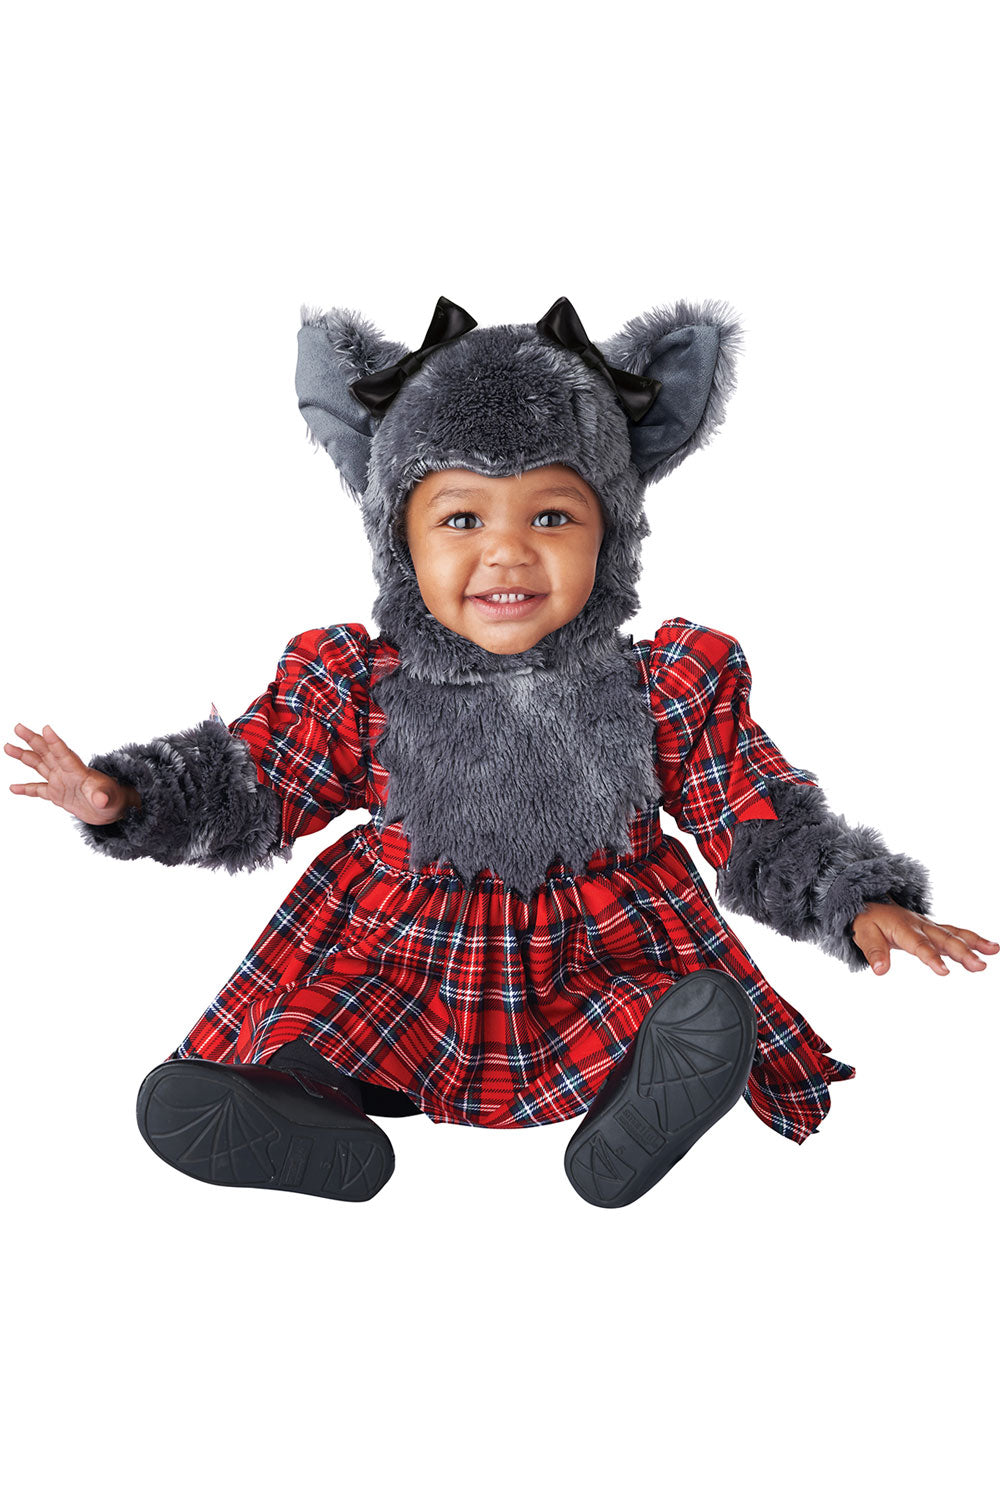 Teeny Weeny Werewolf / Infant California Costume 1020/090